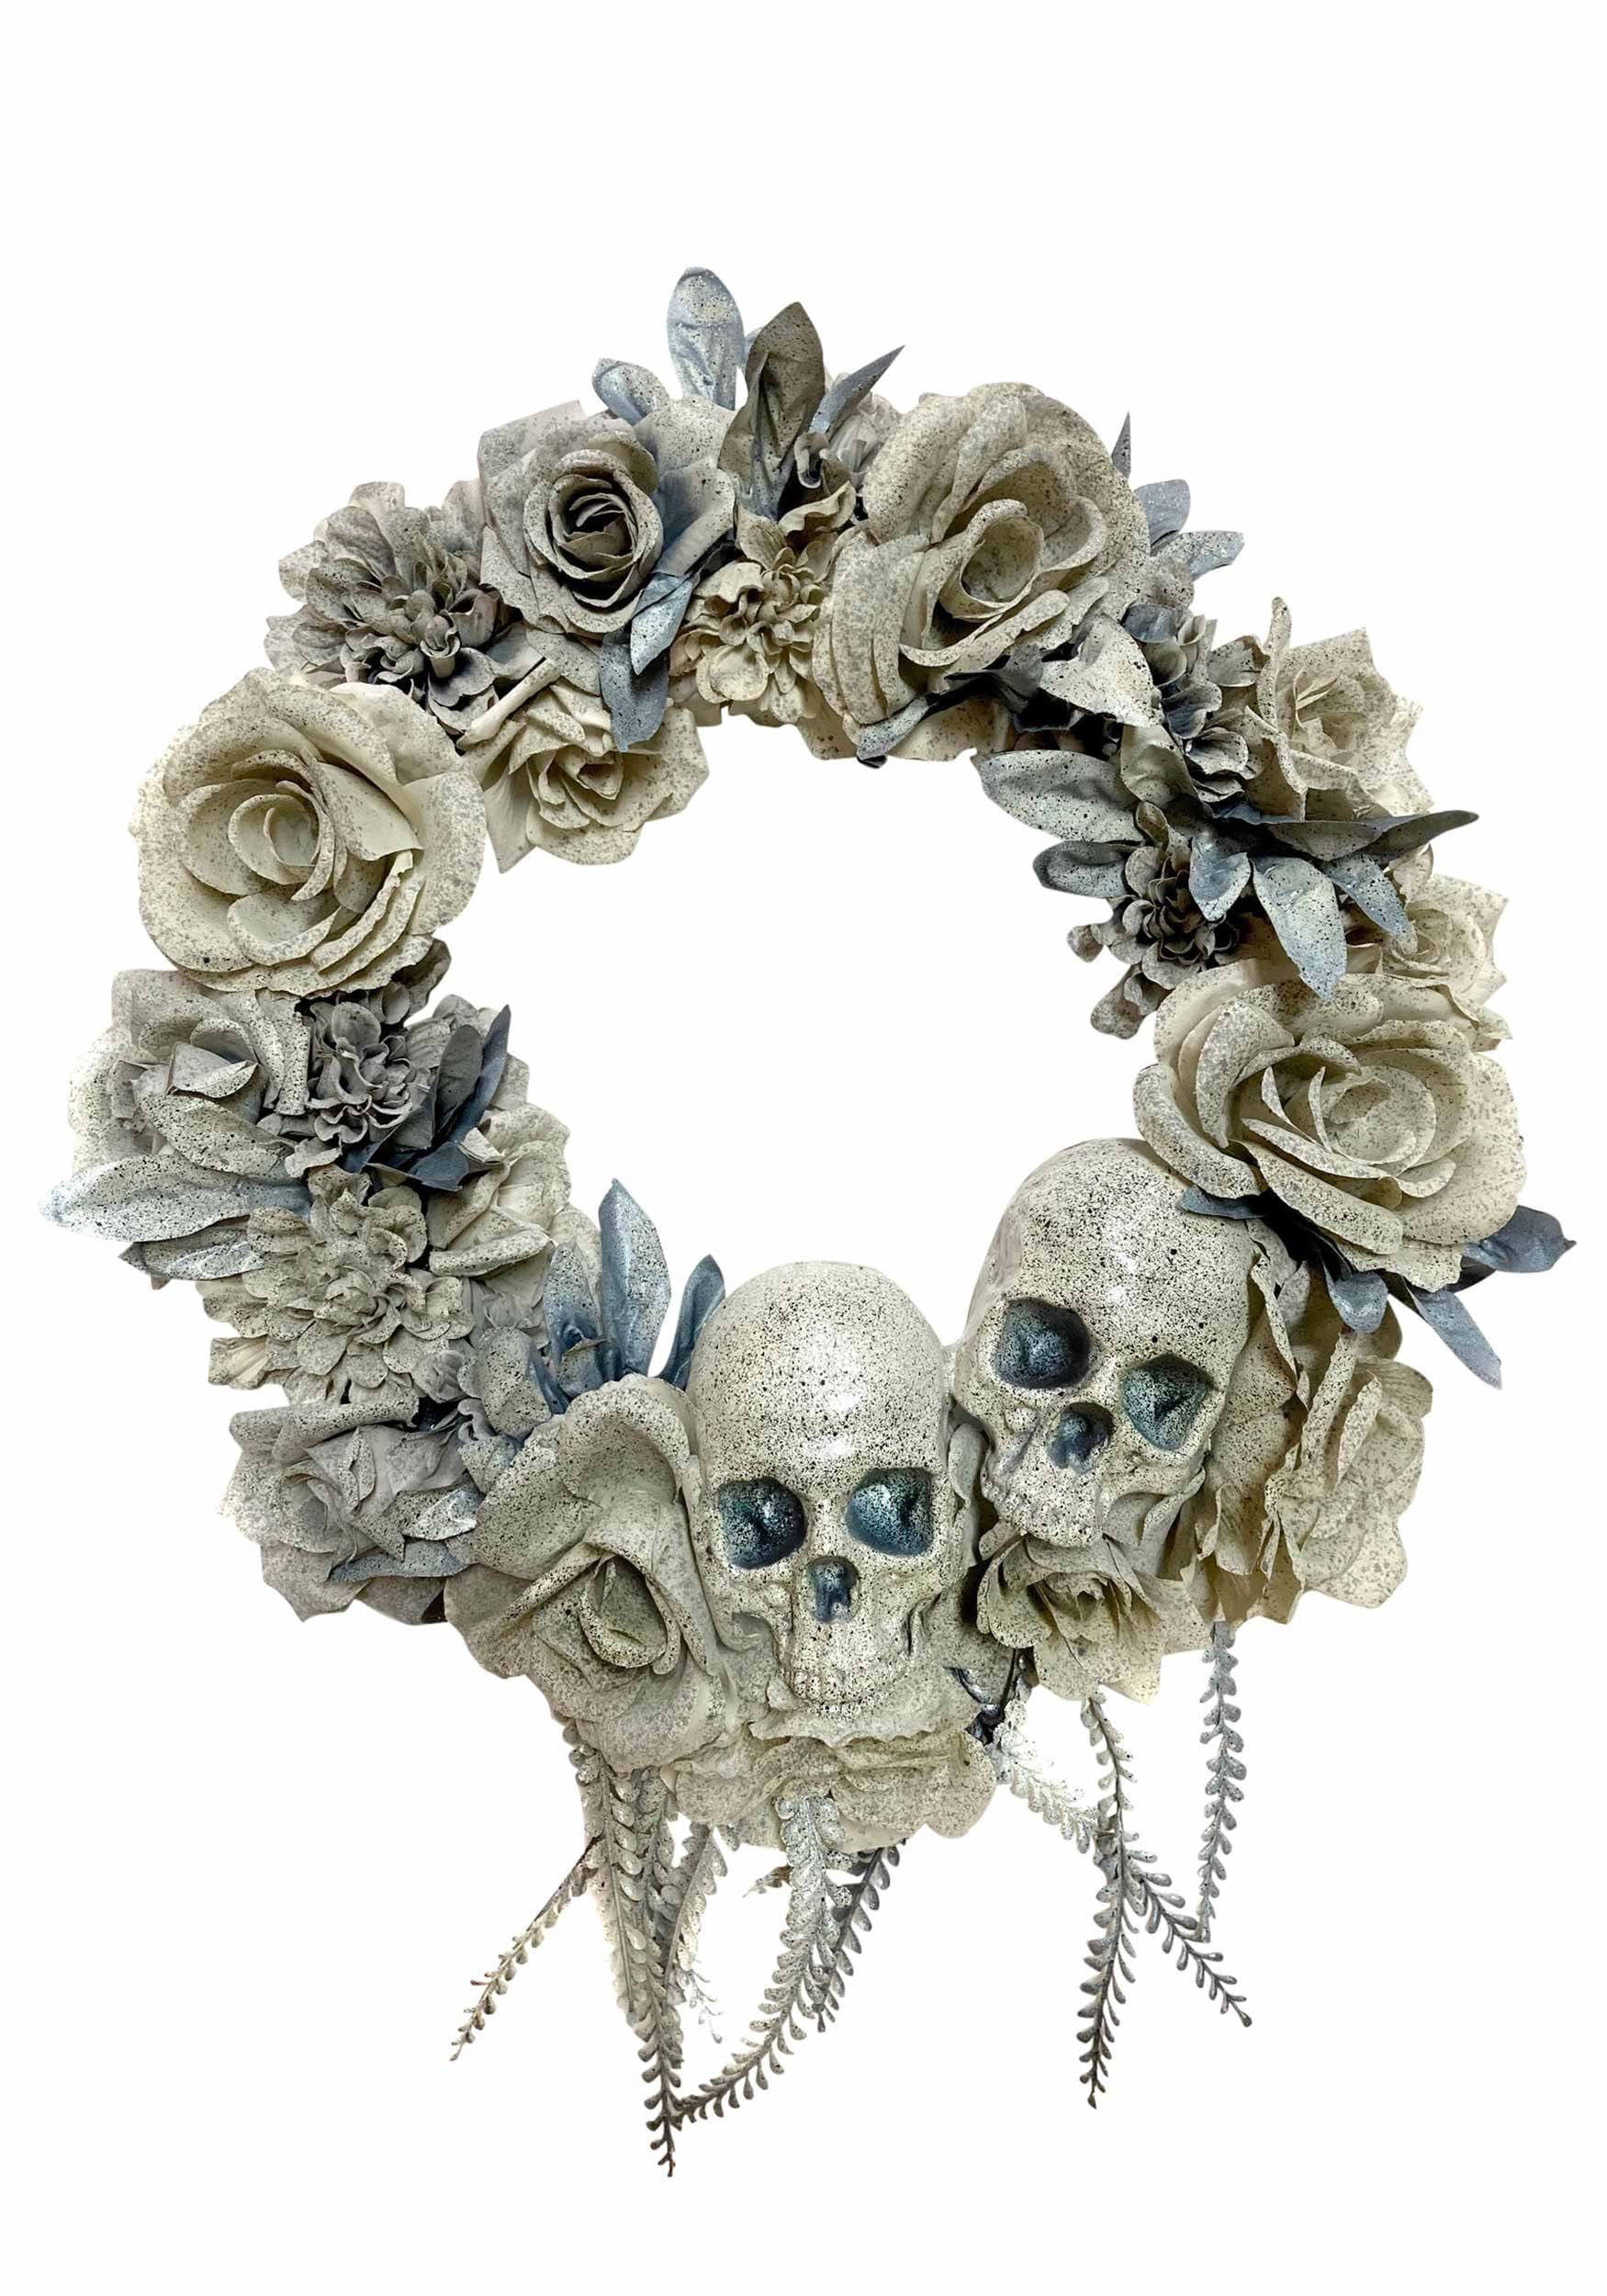 20 Faded Skull & Roses Wreath Decoration , Halloween Wreath